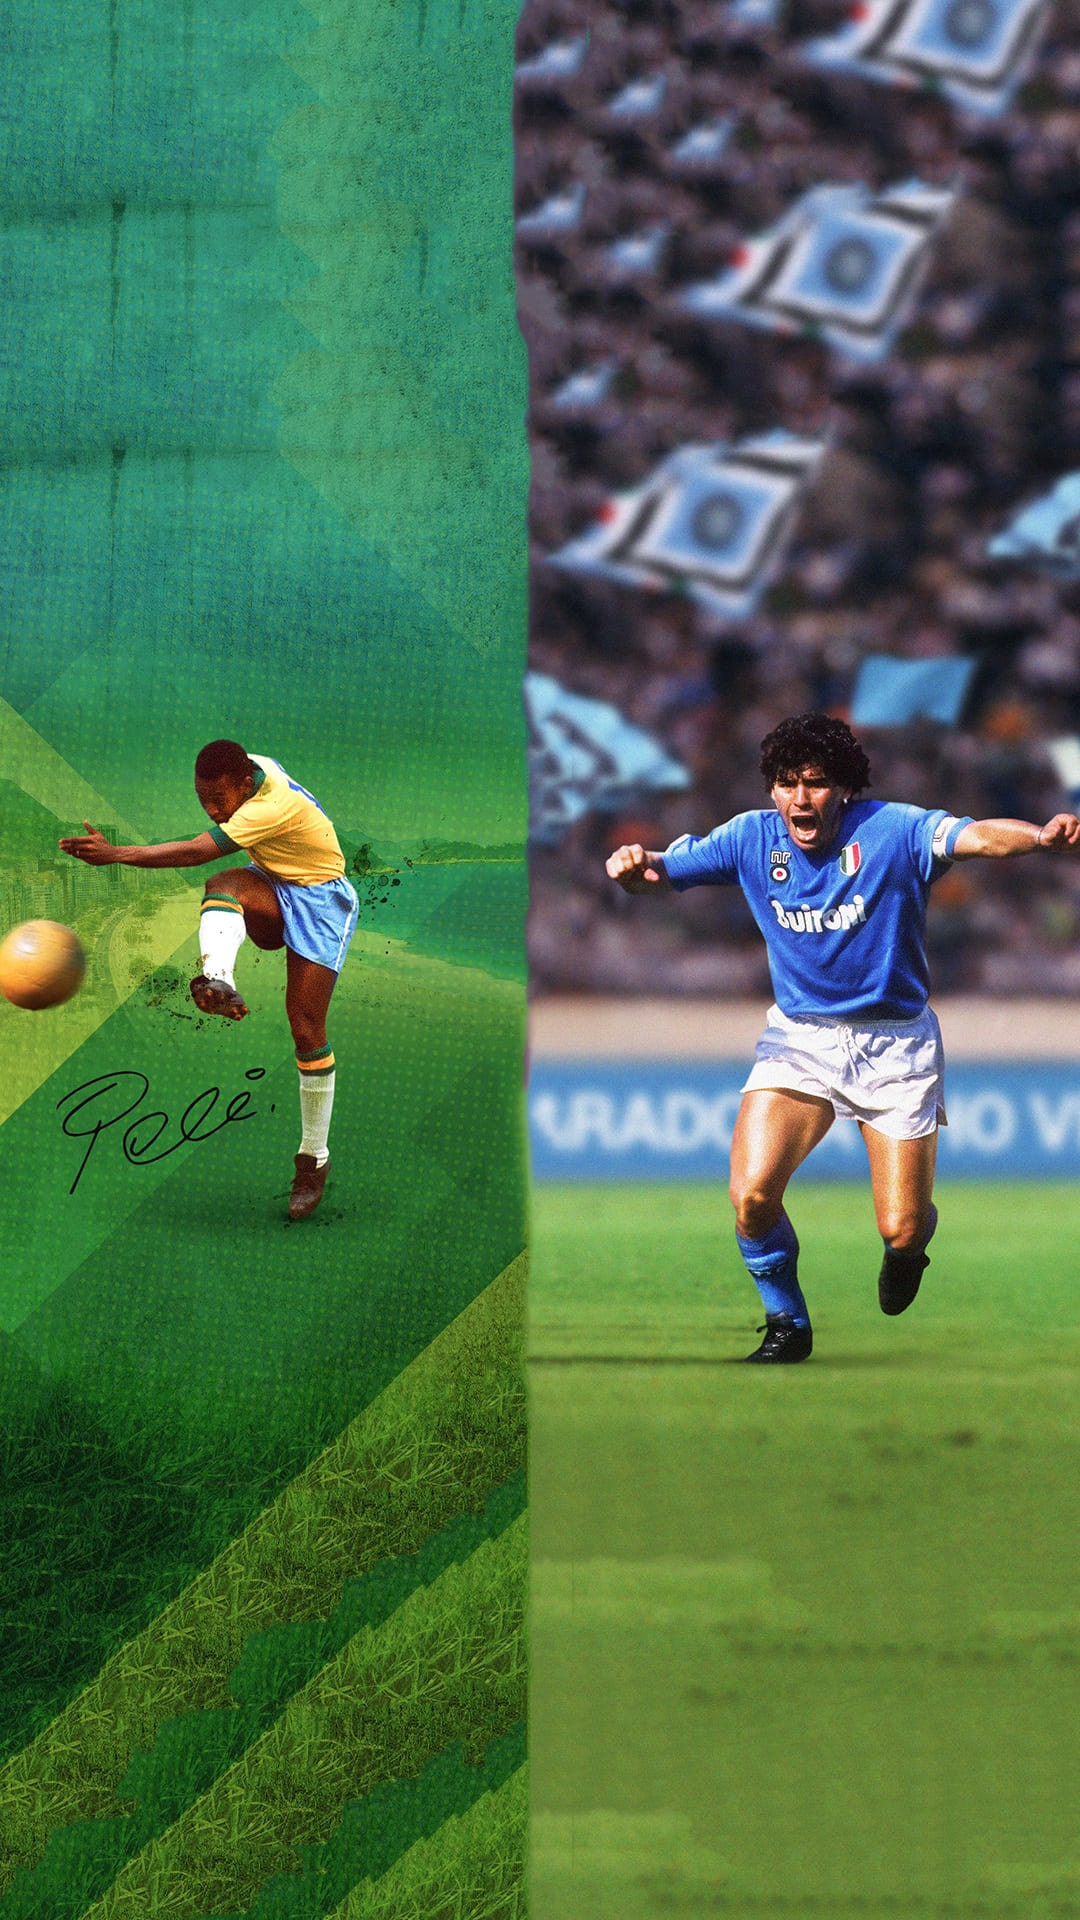 Pele Y Maradona wallpaper by NicoPerez913 - Download on ZEDGE™